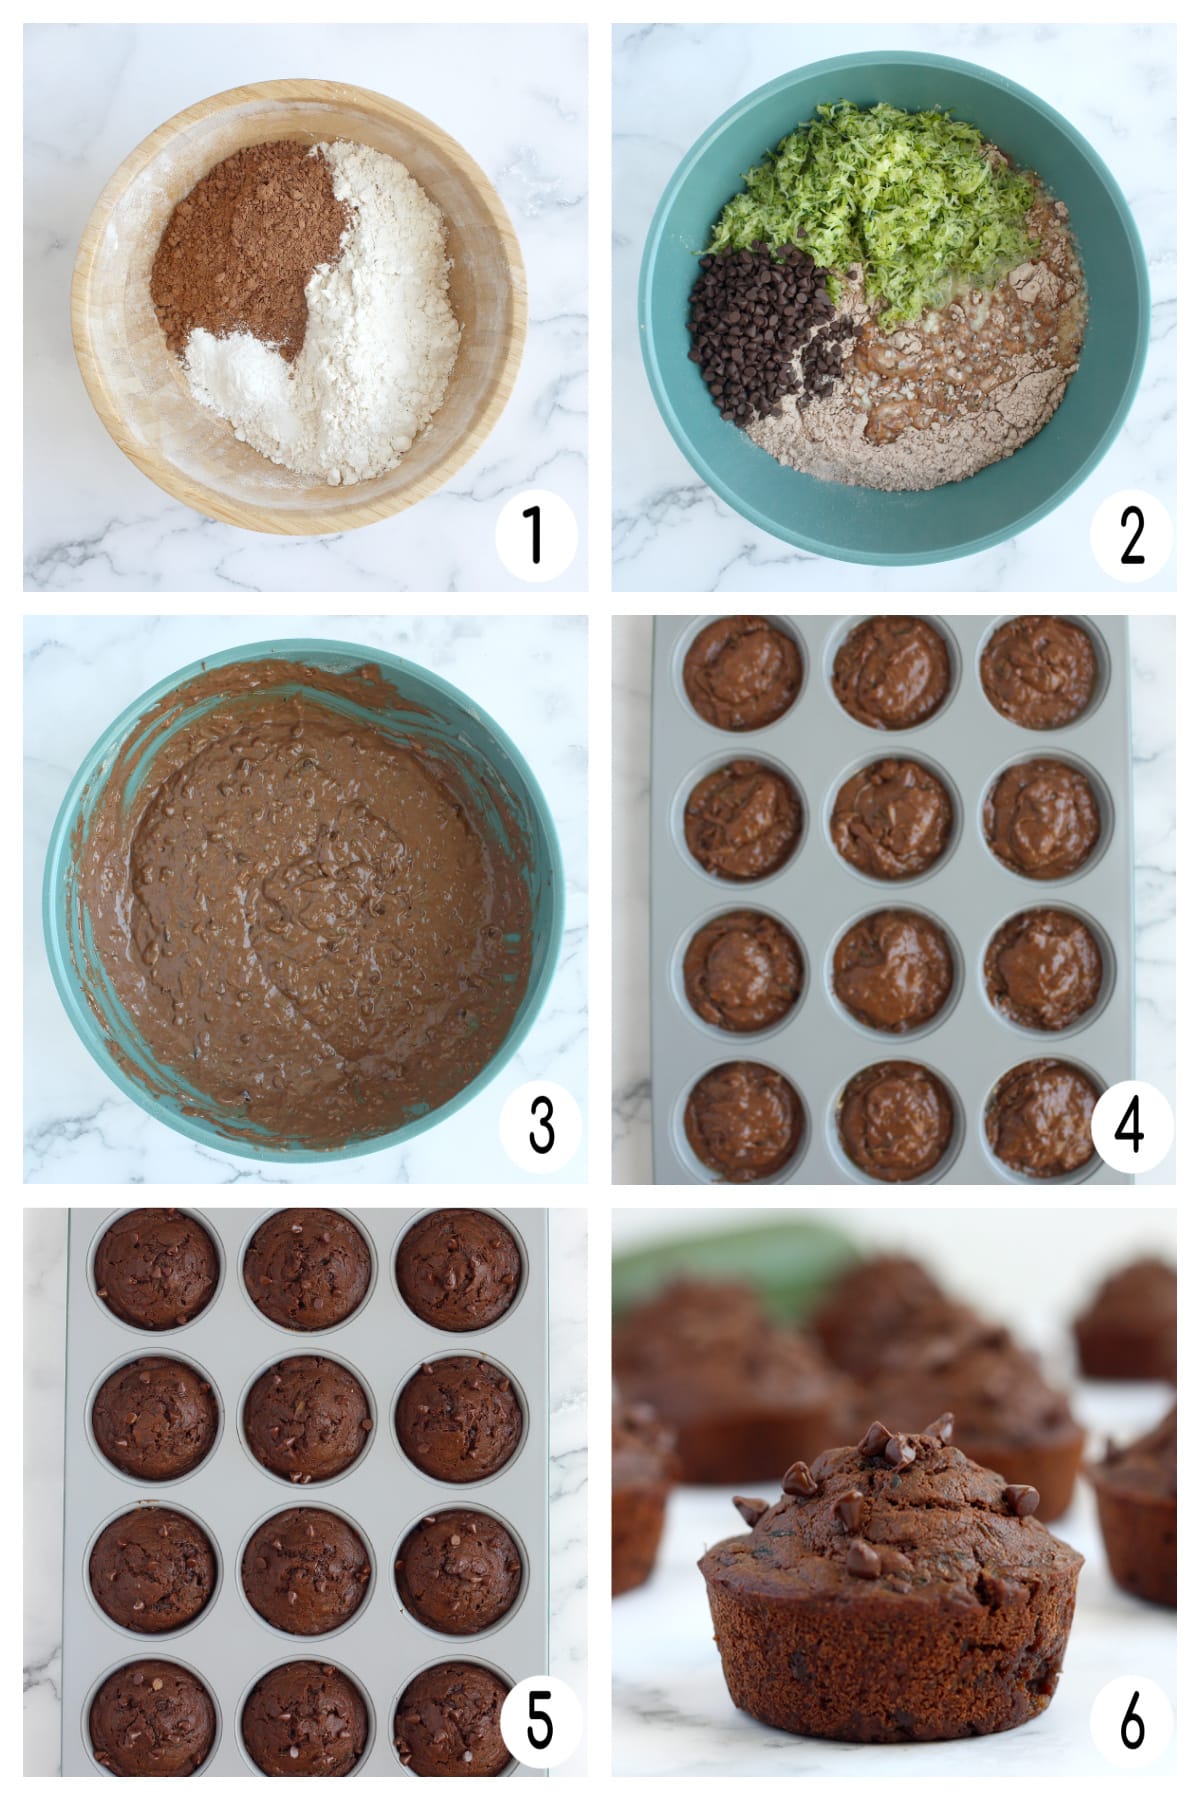 Process shots showing how to make chocolate zucchini muffins.